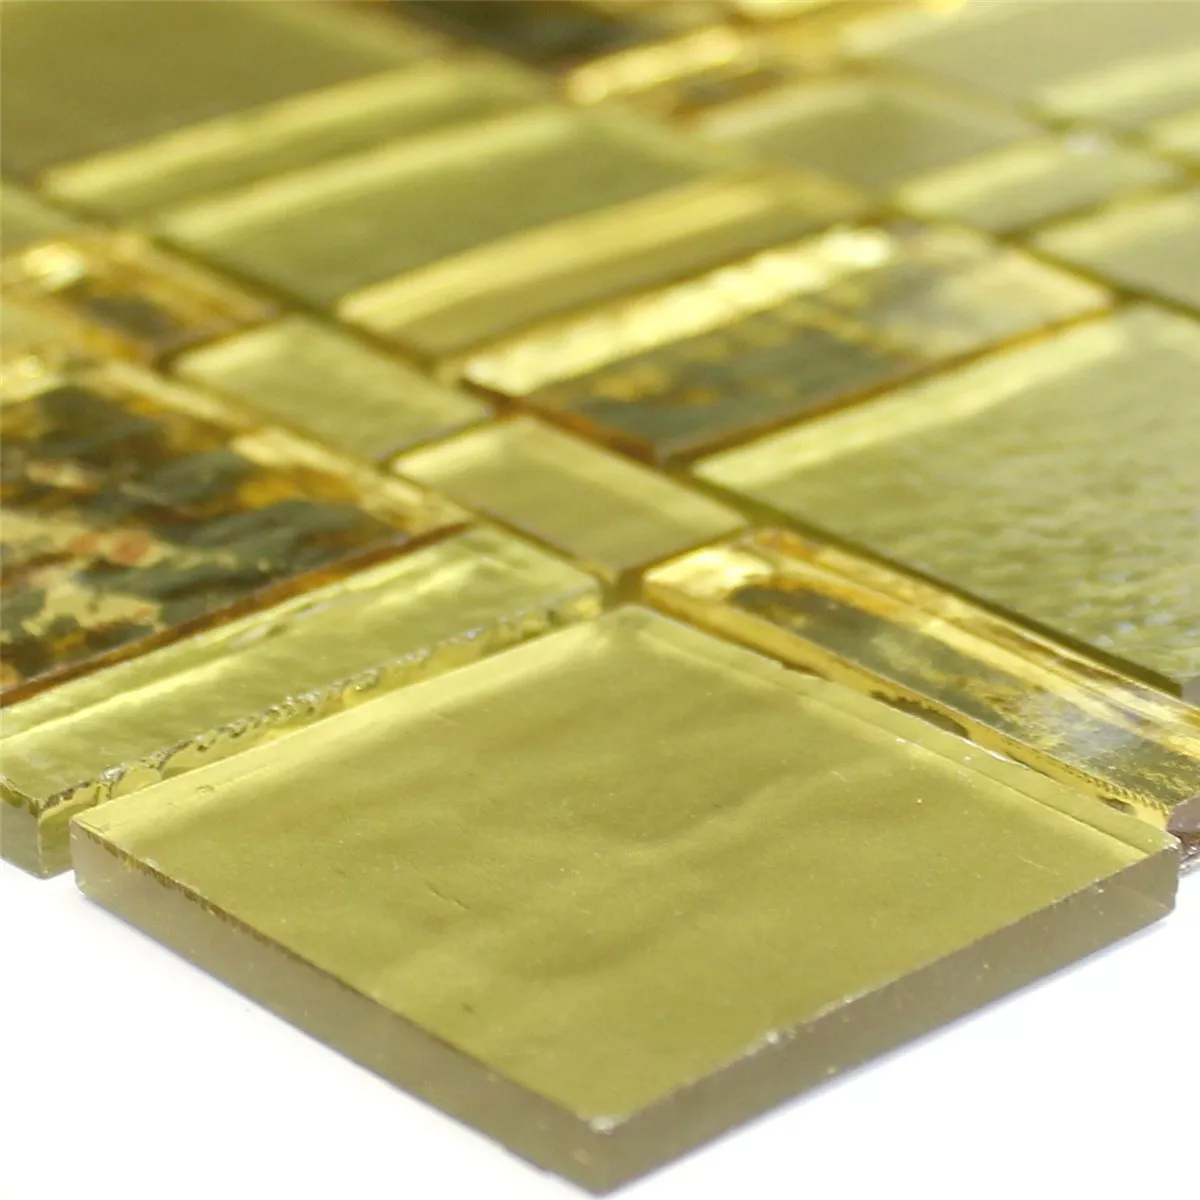 Glas Fliesen Trend Recycling Mosaik Liberty Topaz Gold